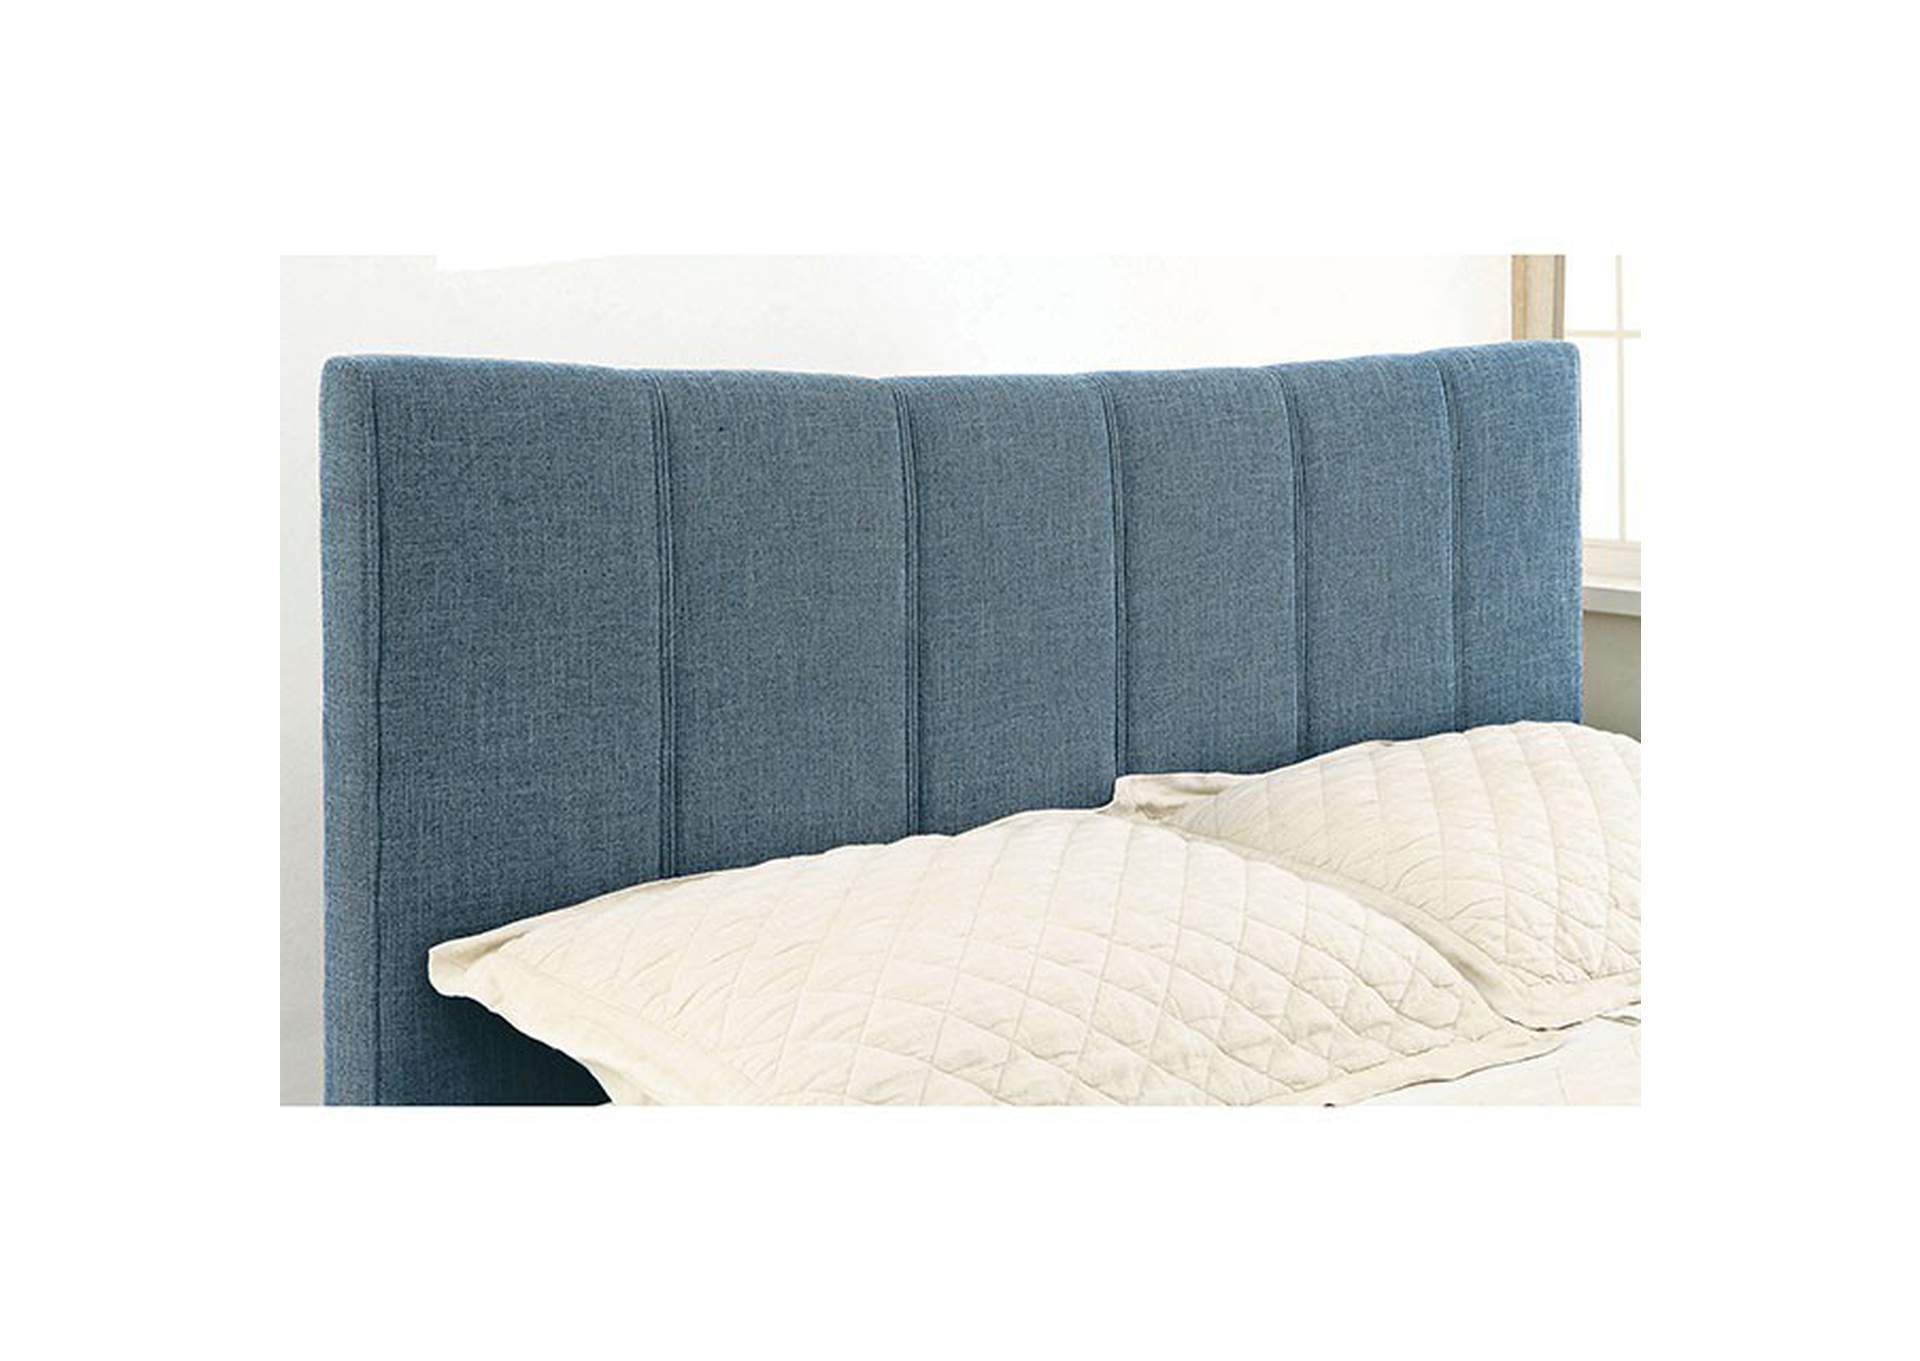 Ennis Full Bed, Dark Blue,Furniture of America